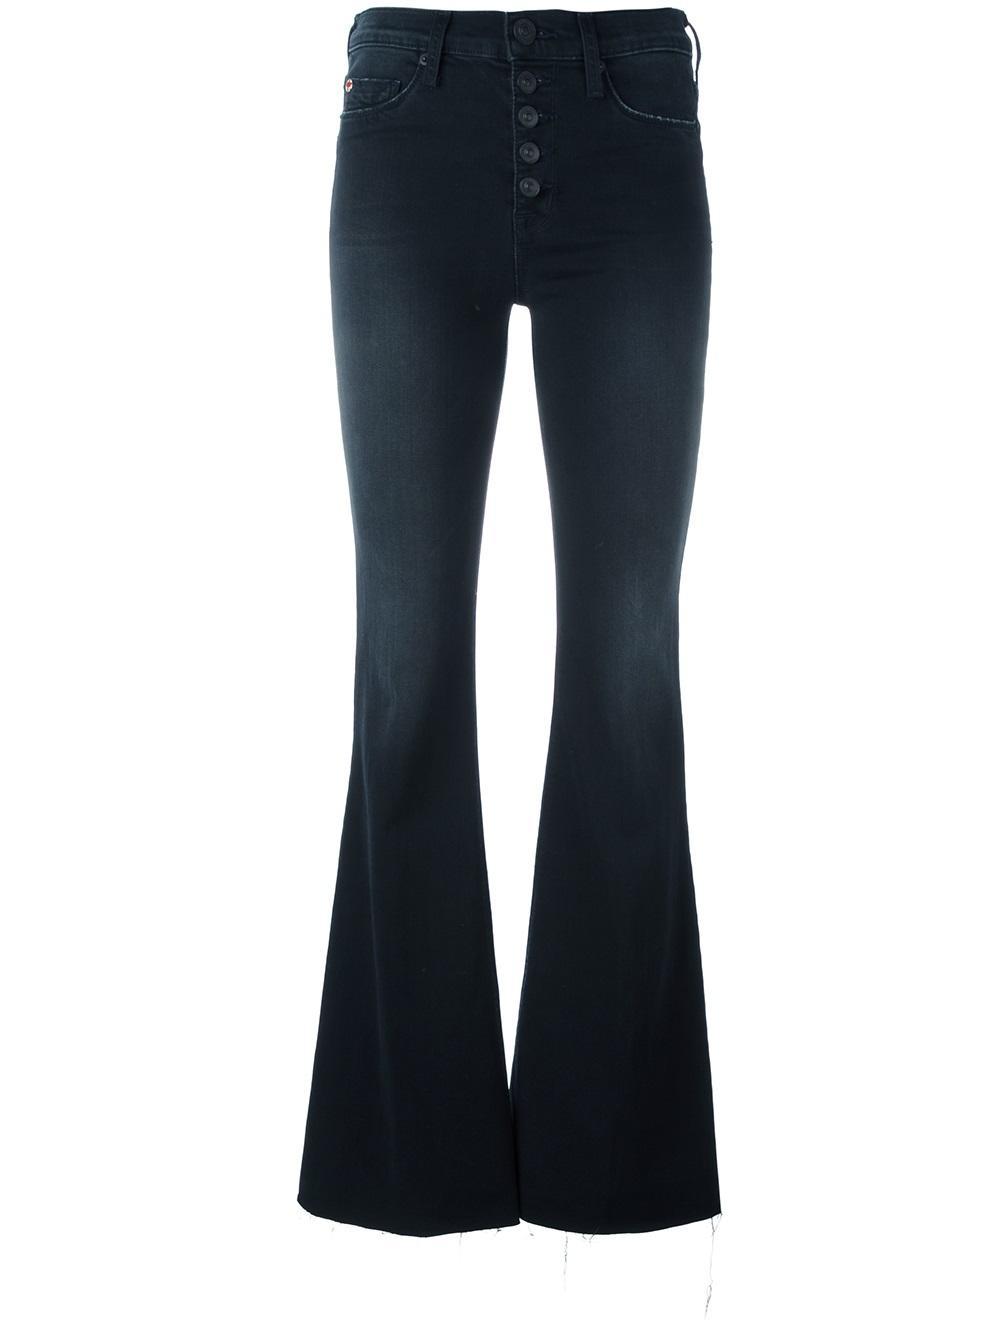 Hudson jeans - High Waist Flared Jeans - Women - Cotton/polyester ...